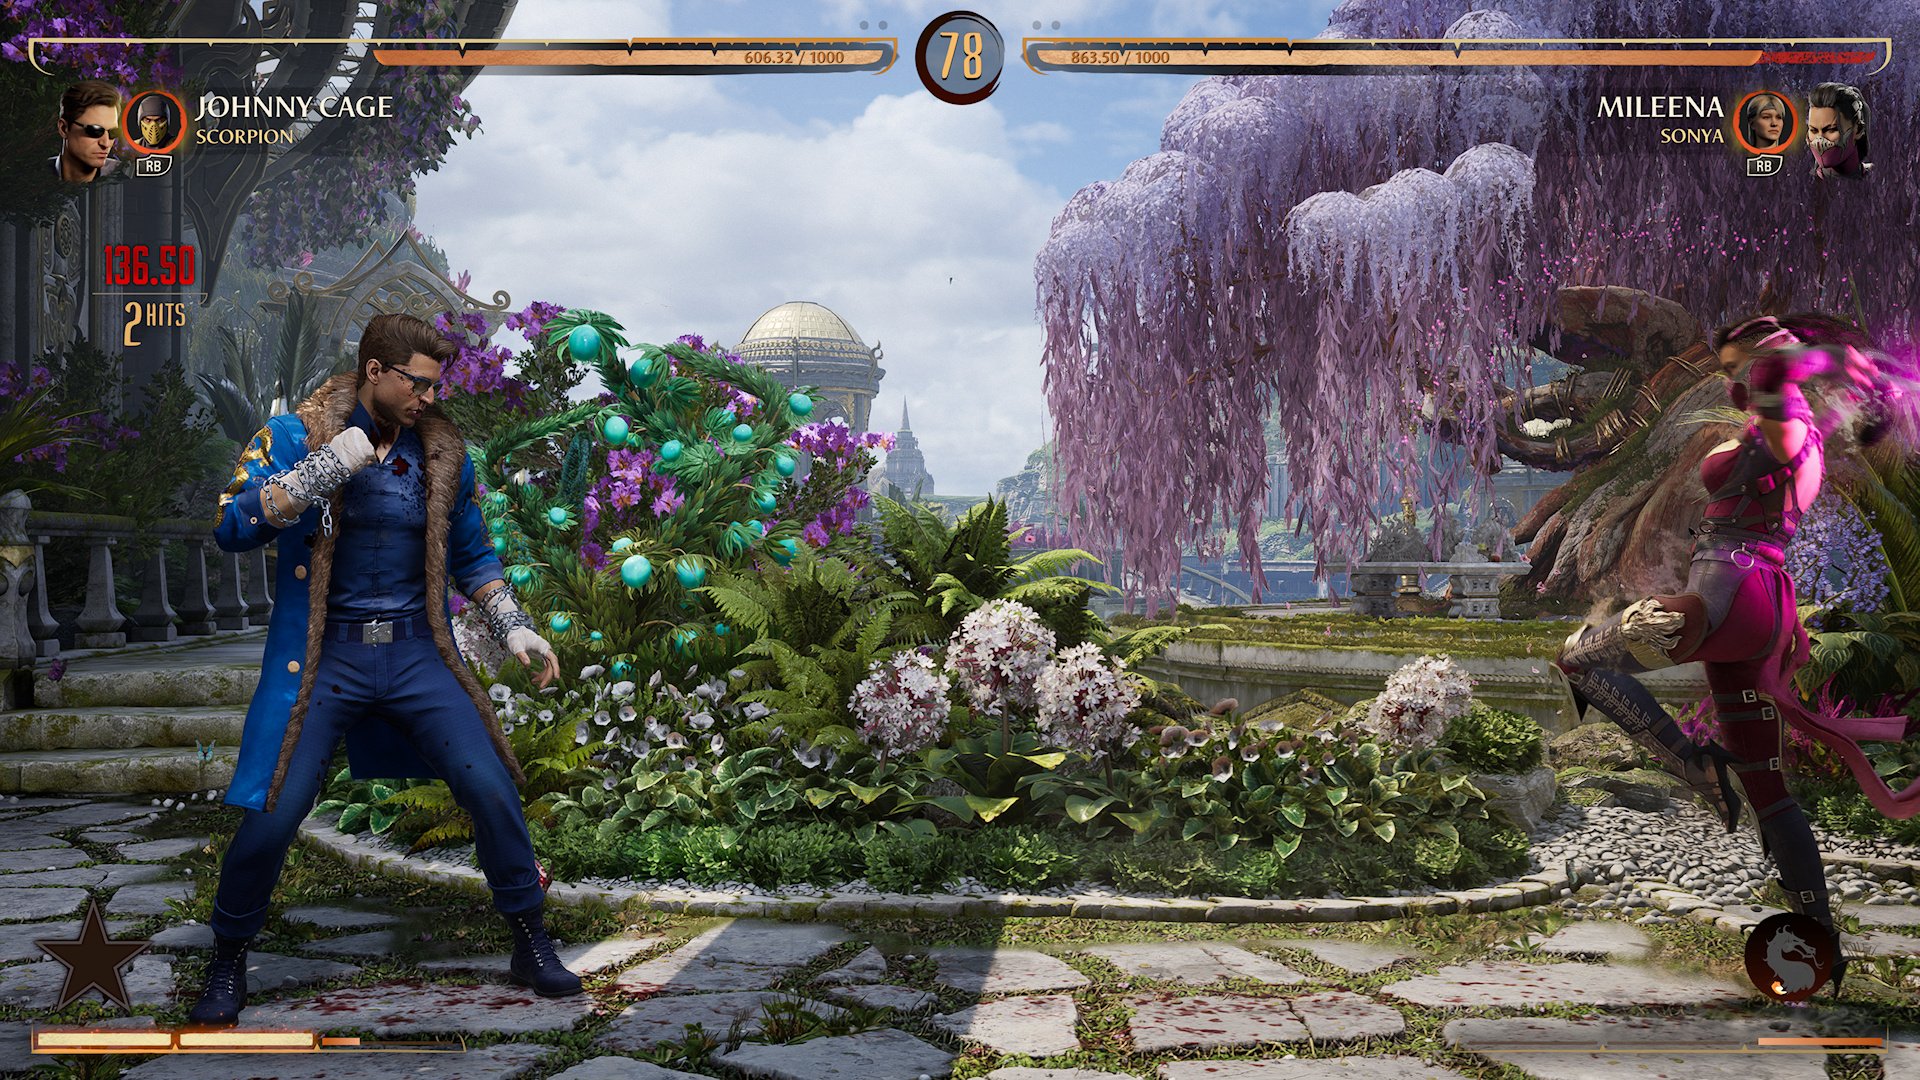 Mortal Kombat 1 beta impressions: impresses across the board